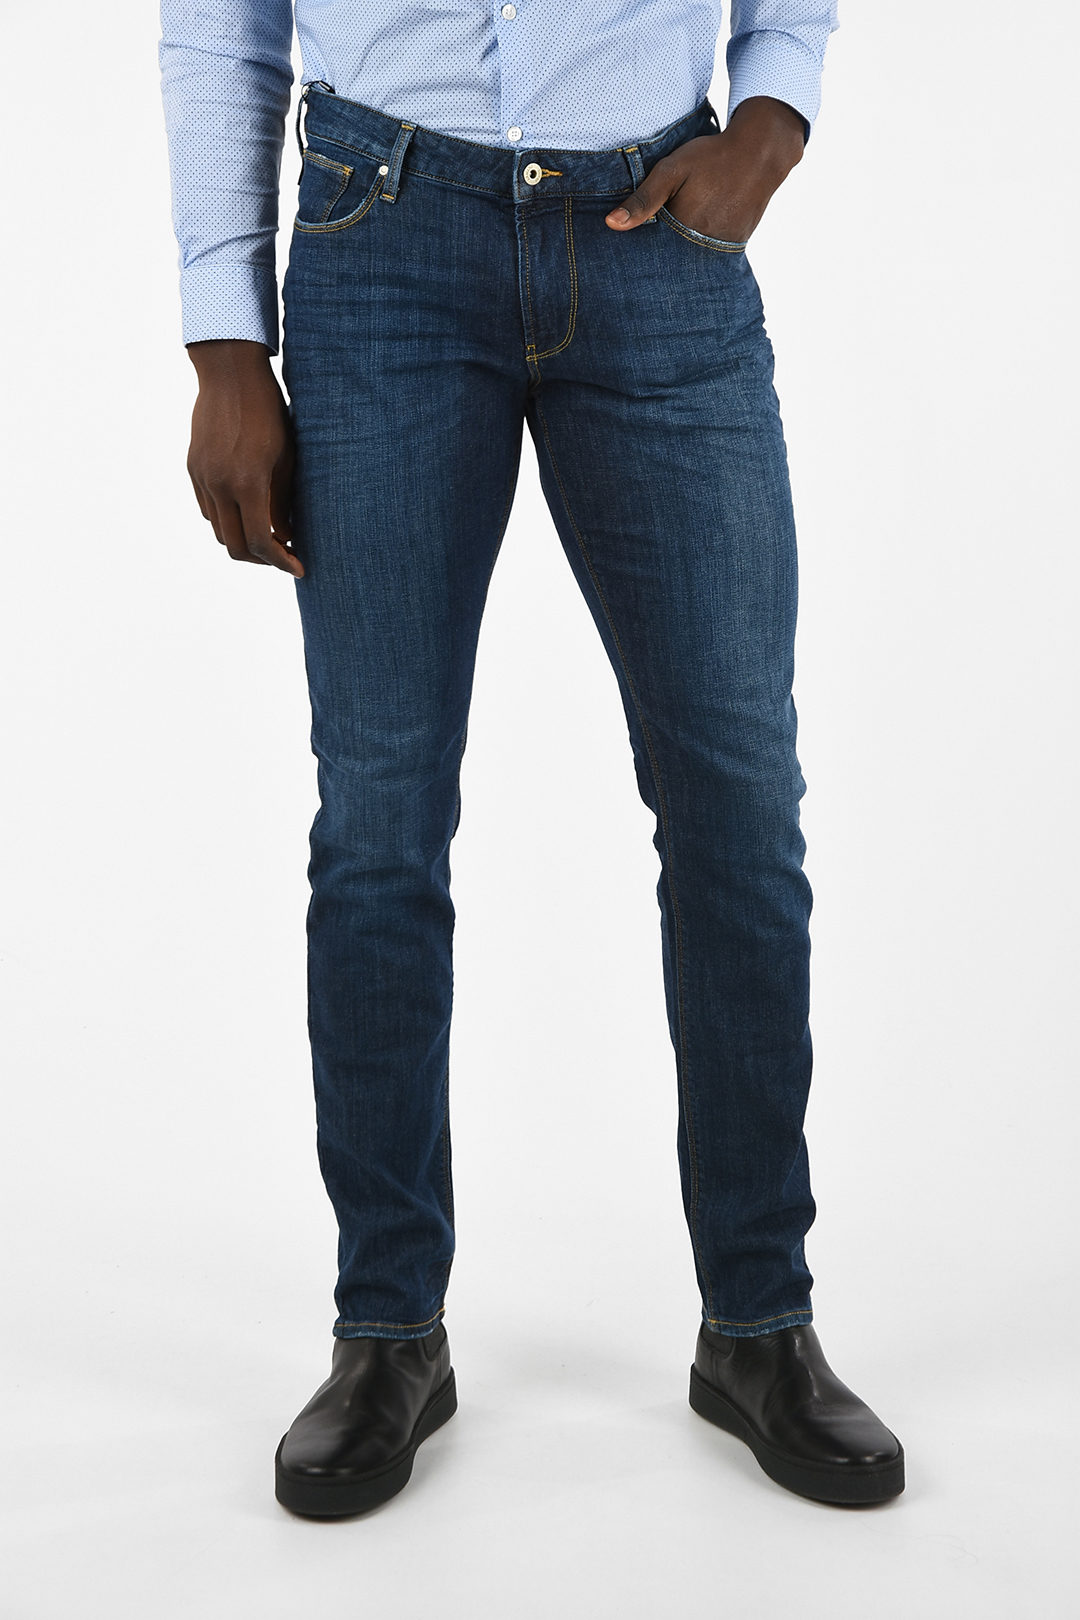 Armani ARMANI JEANS 18cm Slim Fit J06 Jeans L34 men - Glamood Outlet